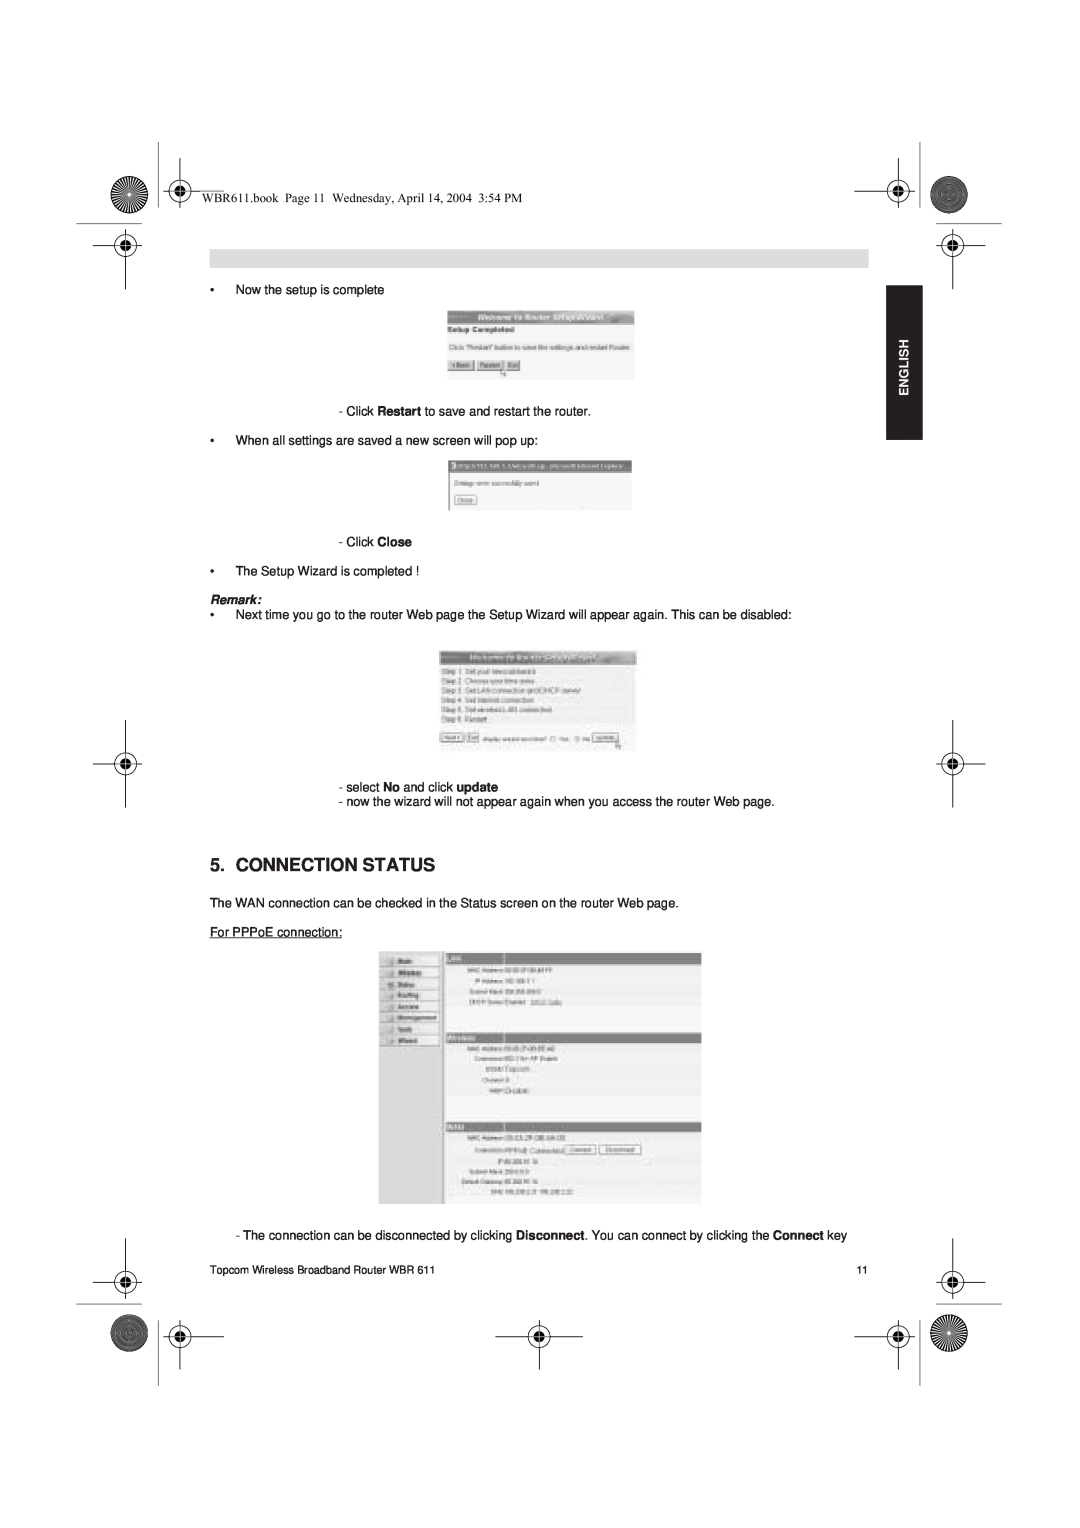 Topcom WBR 611 manual do utilizador Connection Status, Remark, English 